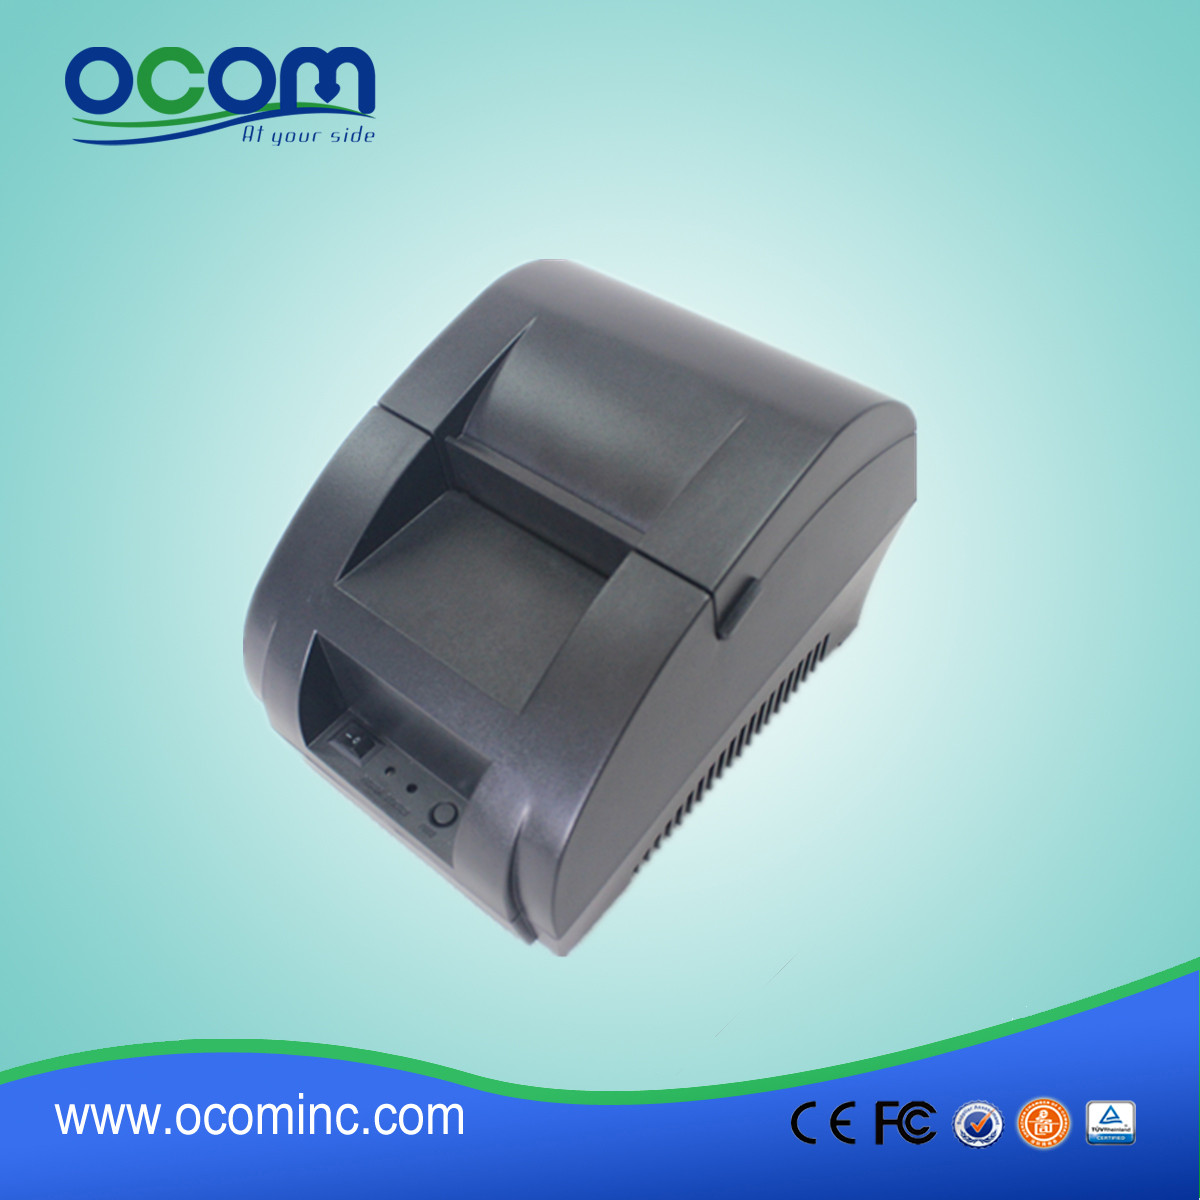 58mm热敏收据打印机，内置电源适配器OCPP-58Z-U